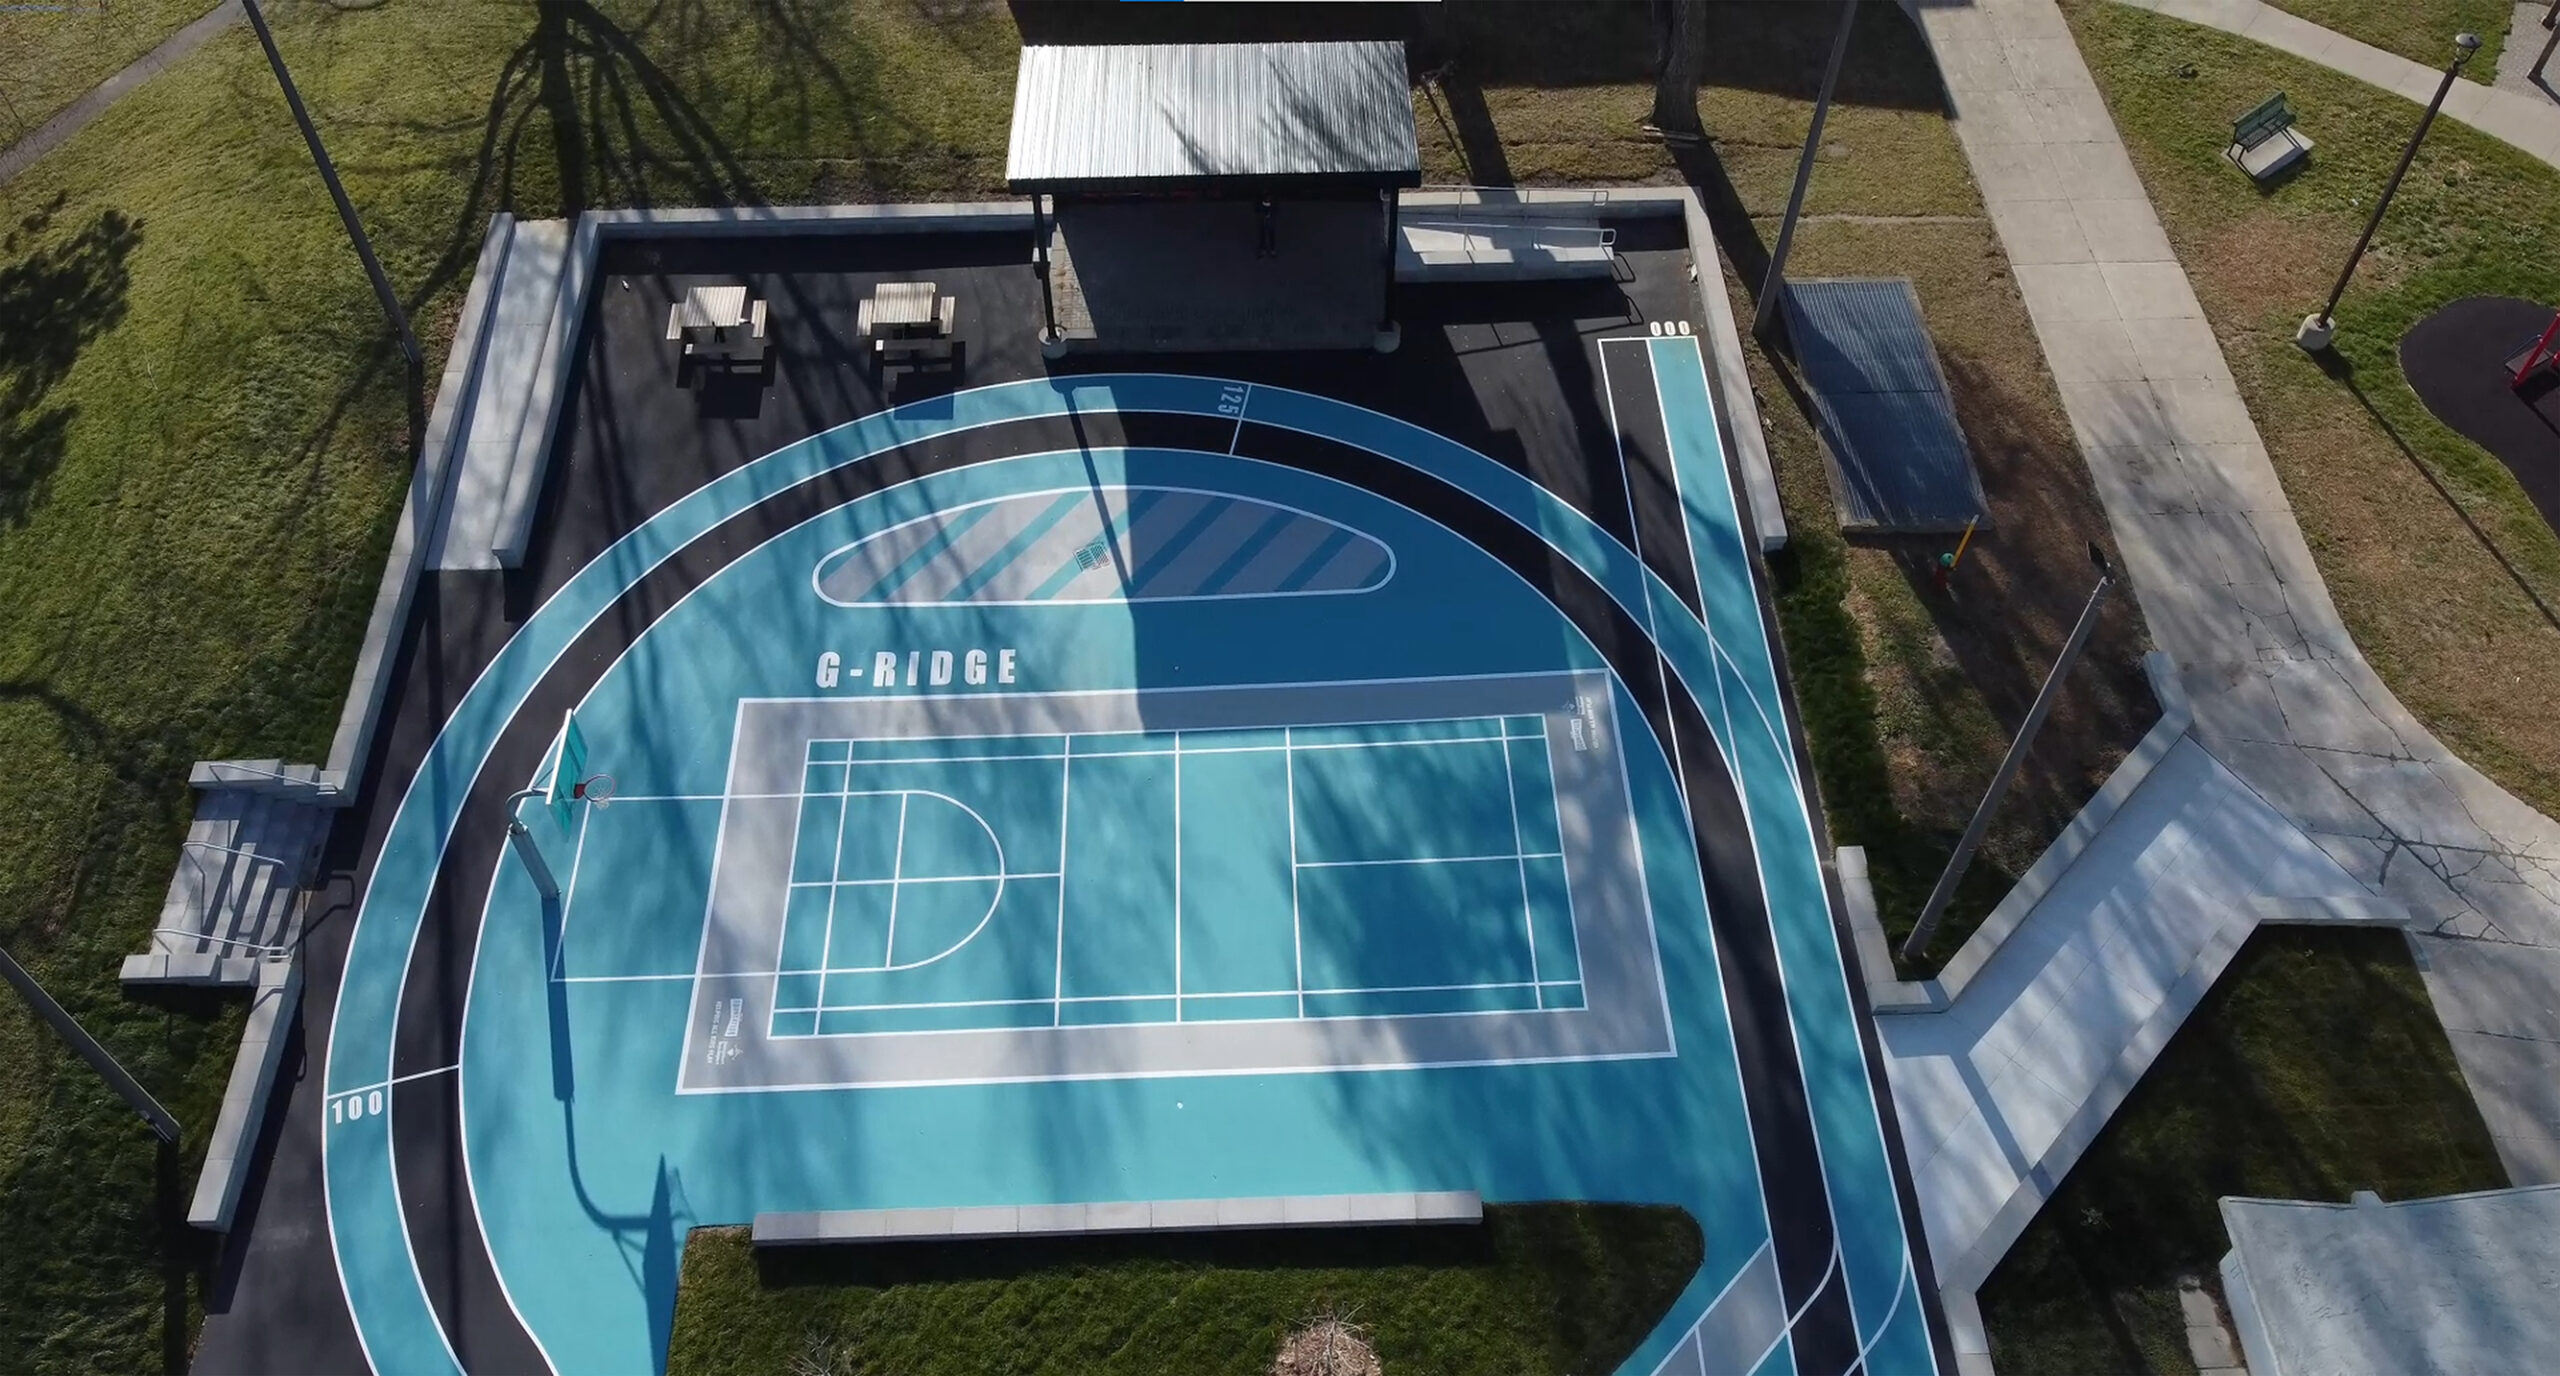 Gordonridge's court with basketball nets, seating and storage.